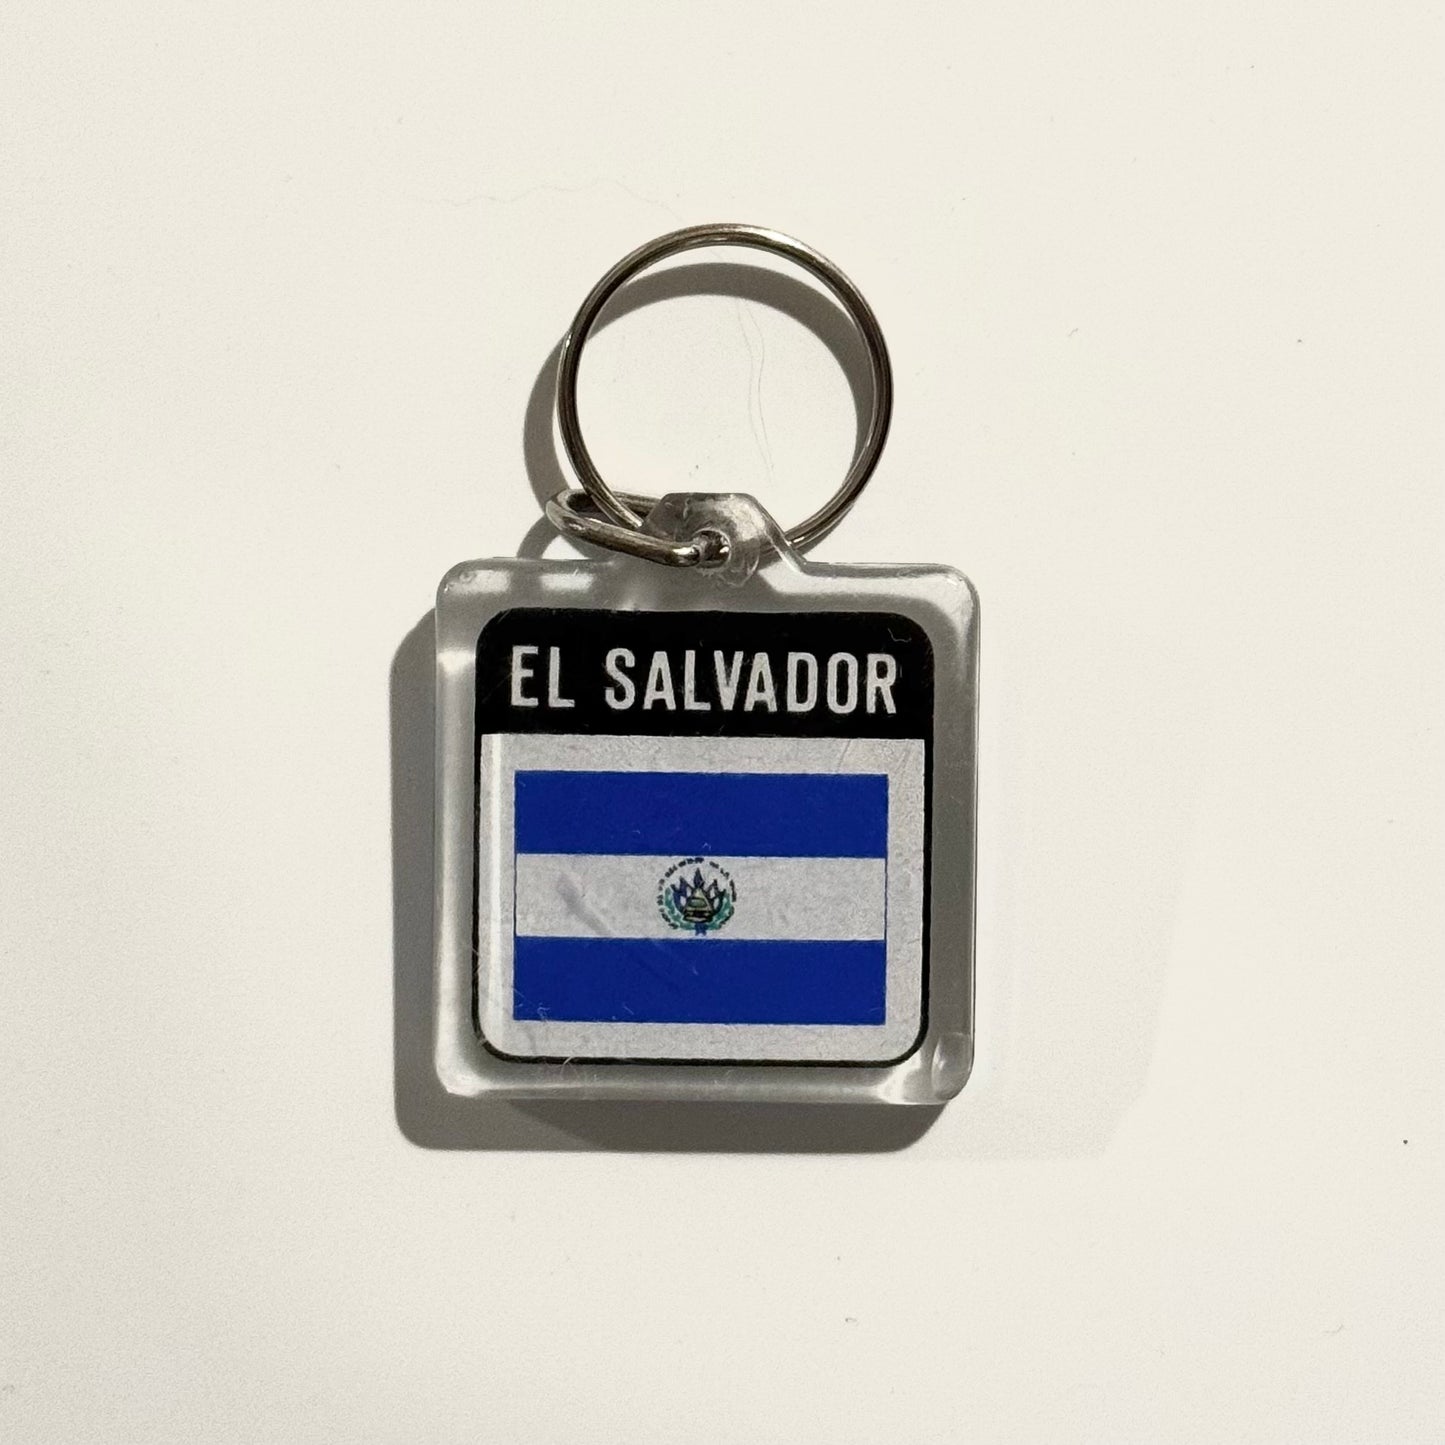 El Salvador Travel Souvenir Keychain Key Ring Square Clear Acrylic